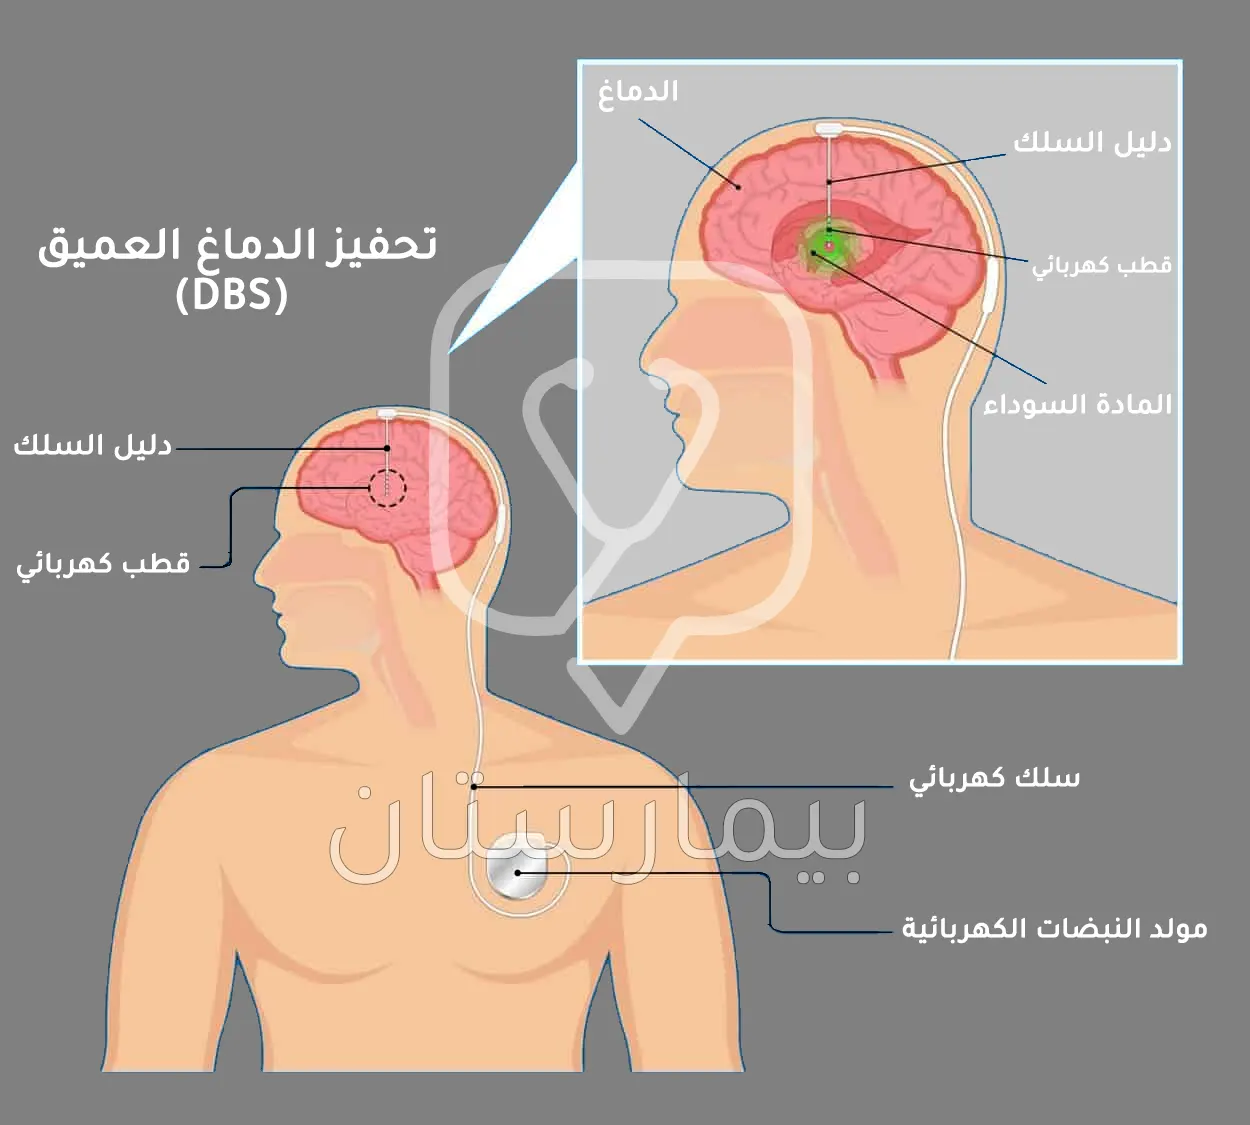 An image that talks about treating Parkinson's disease through deep brain stimulation